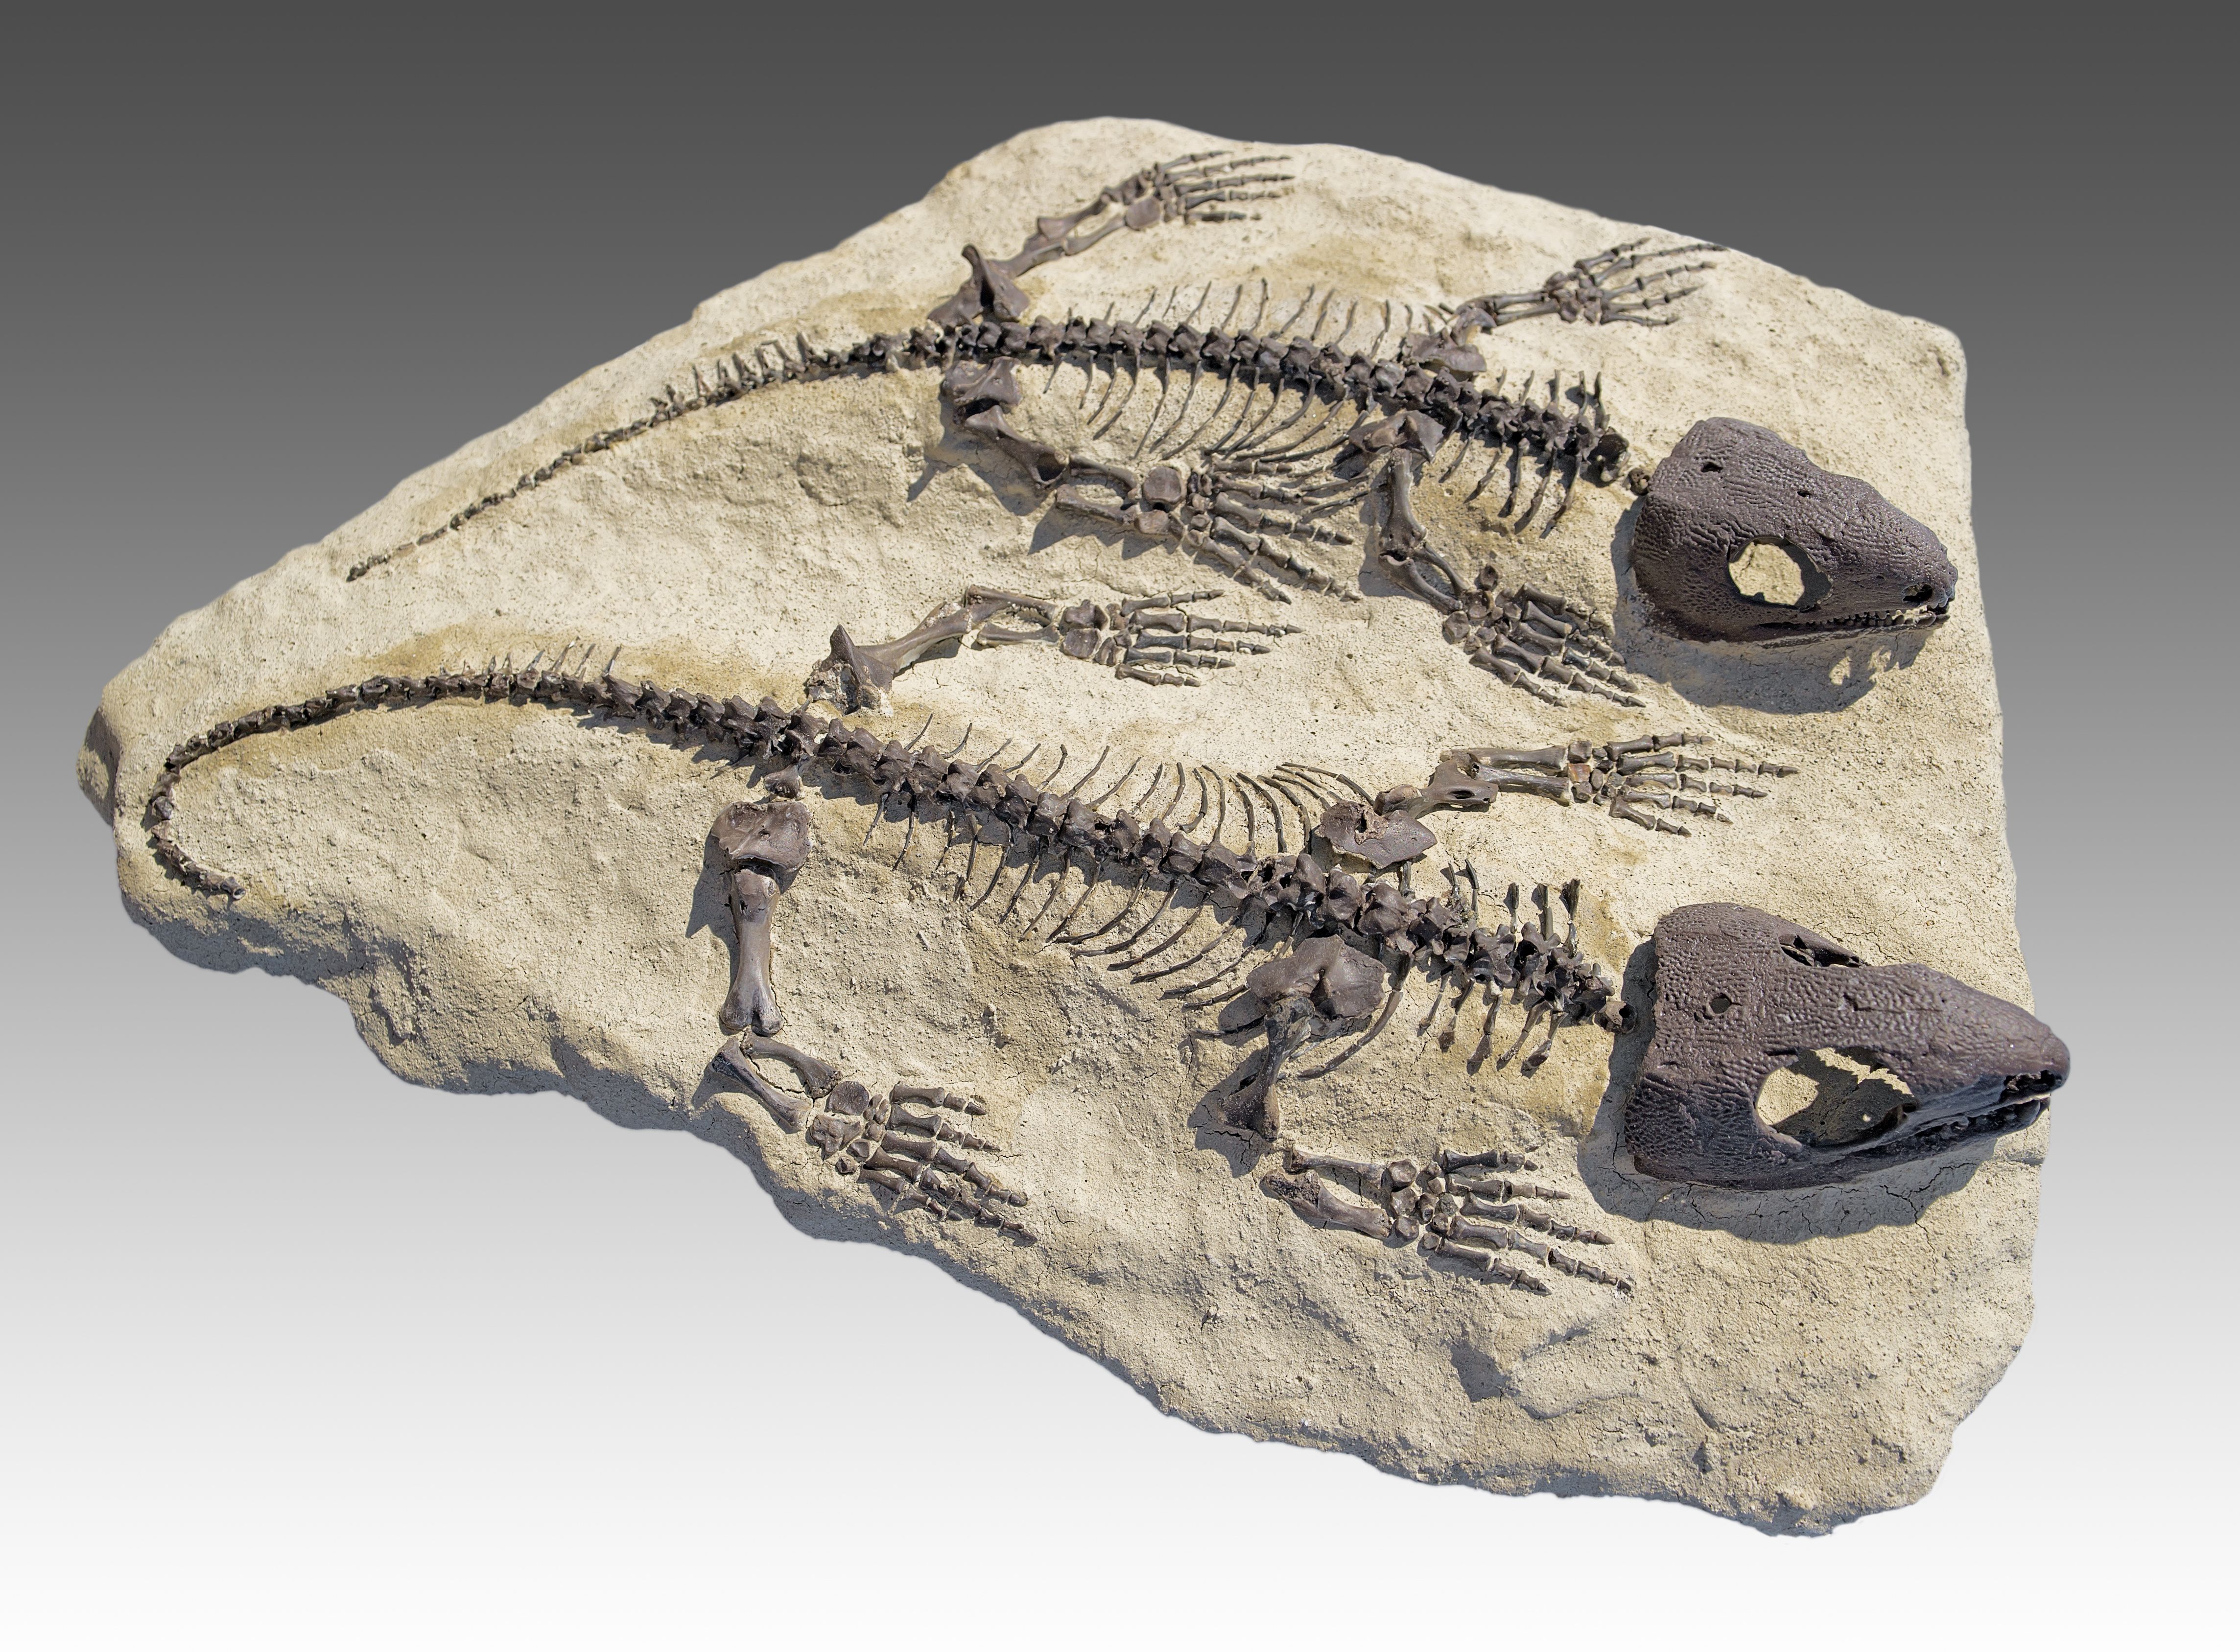 Fossil Captorhinus aguti specimens | Fossils | Pinterest | Fossils ...